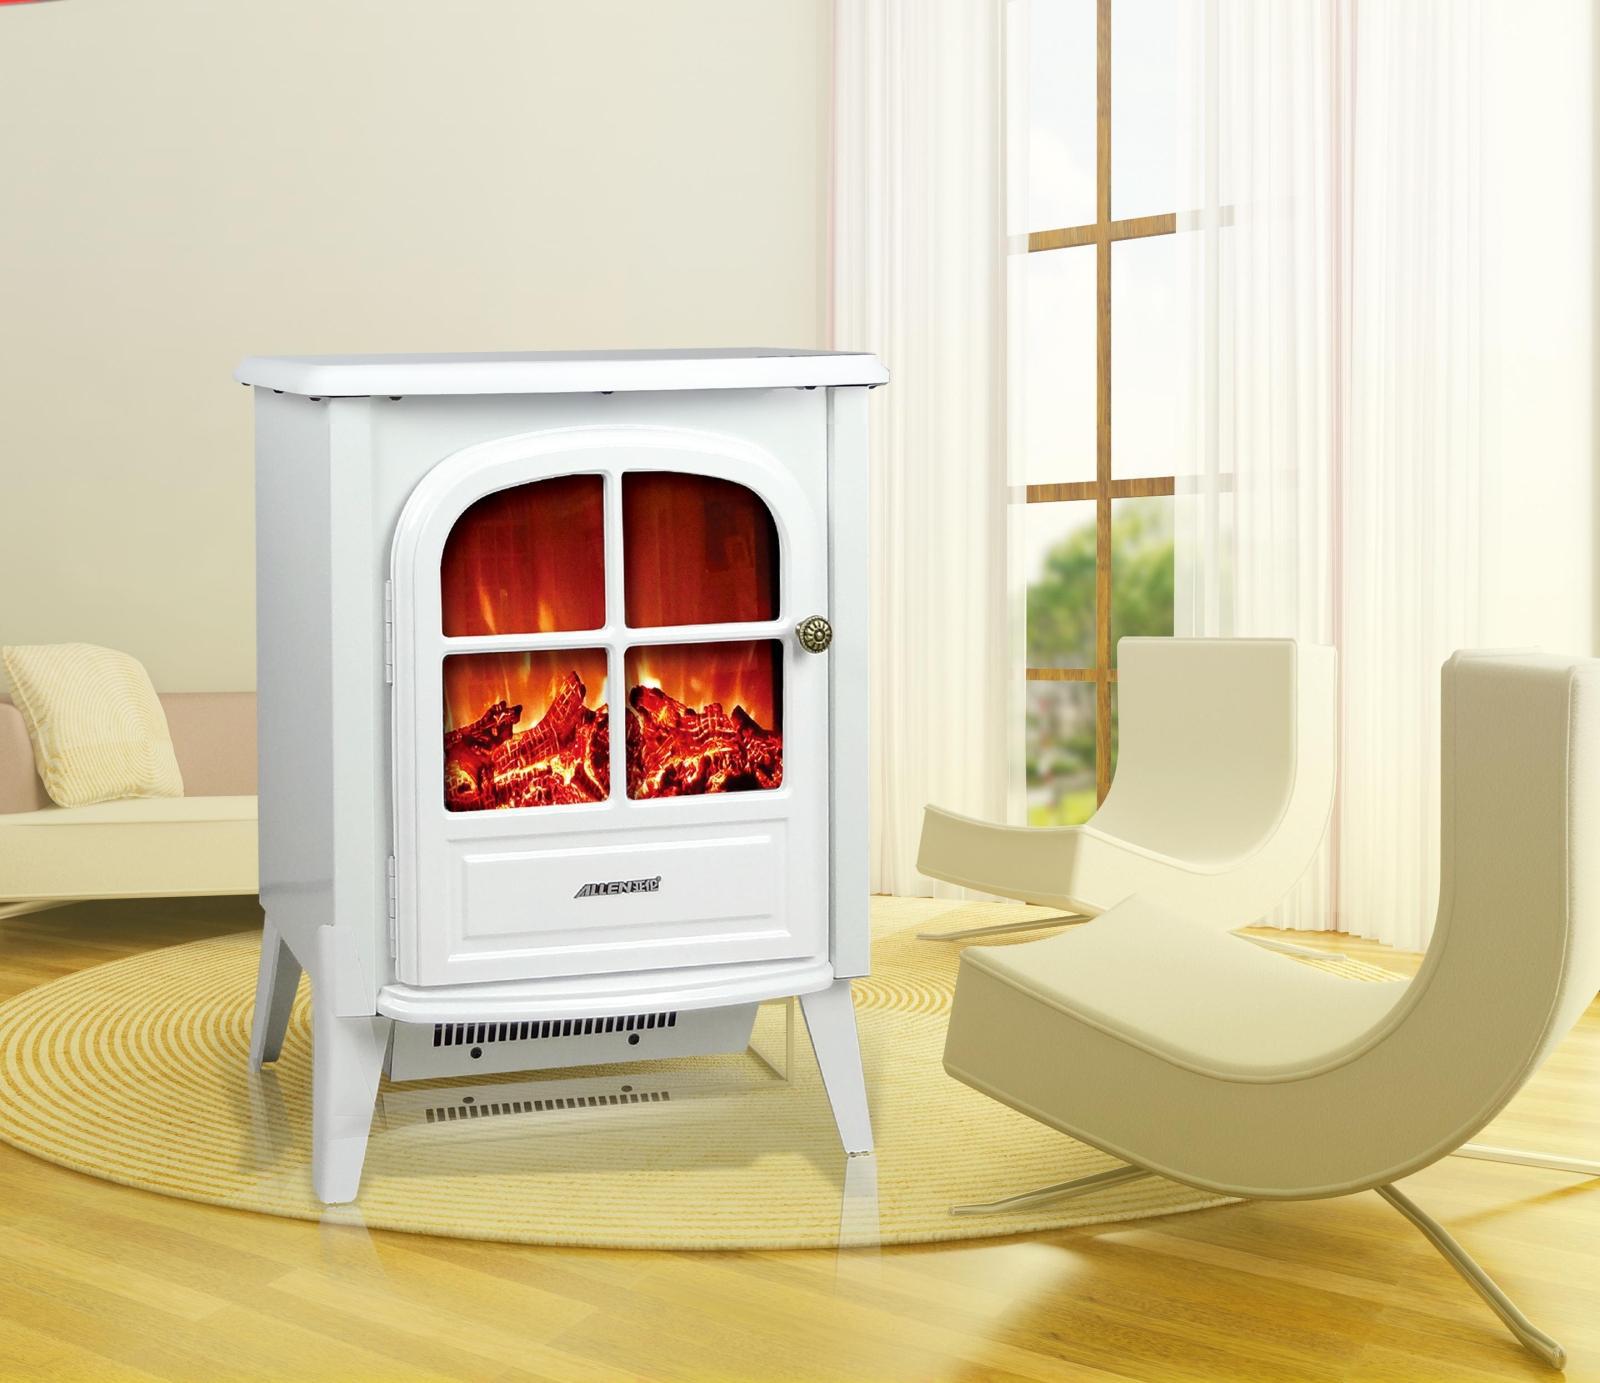 Aaron EA1105 electric fireplace heater household vertical electric heater portable electric heater15